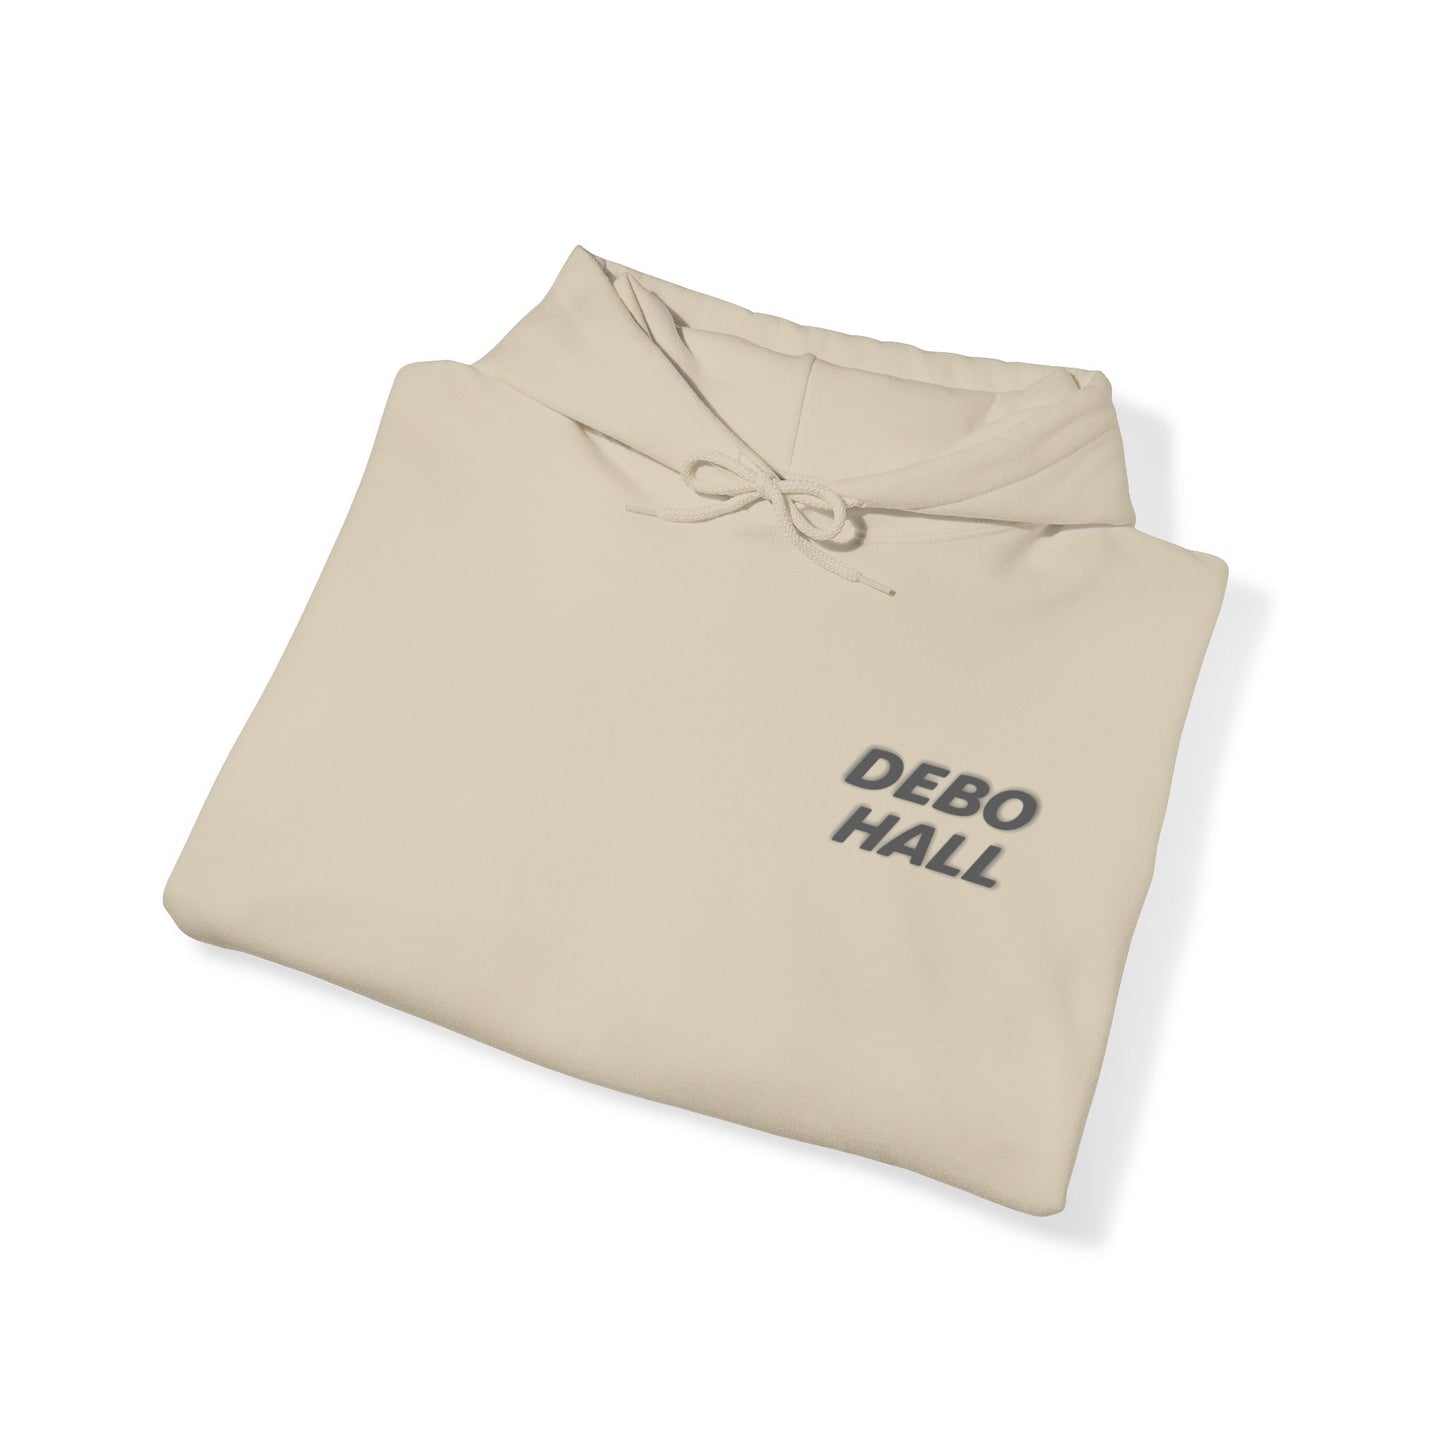 Deadrian Hall: Debo Hall Hoodie